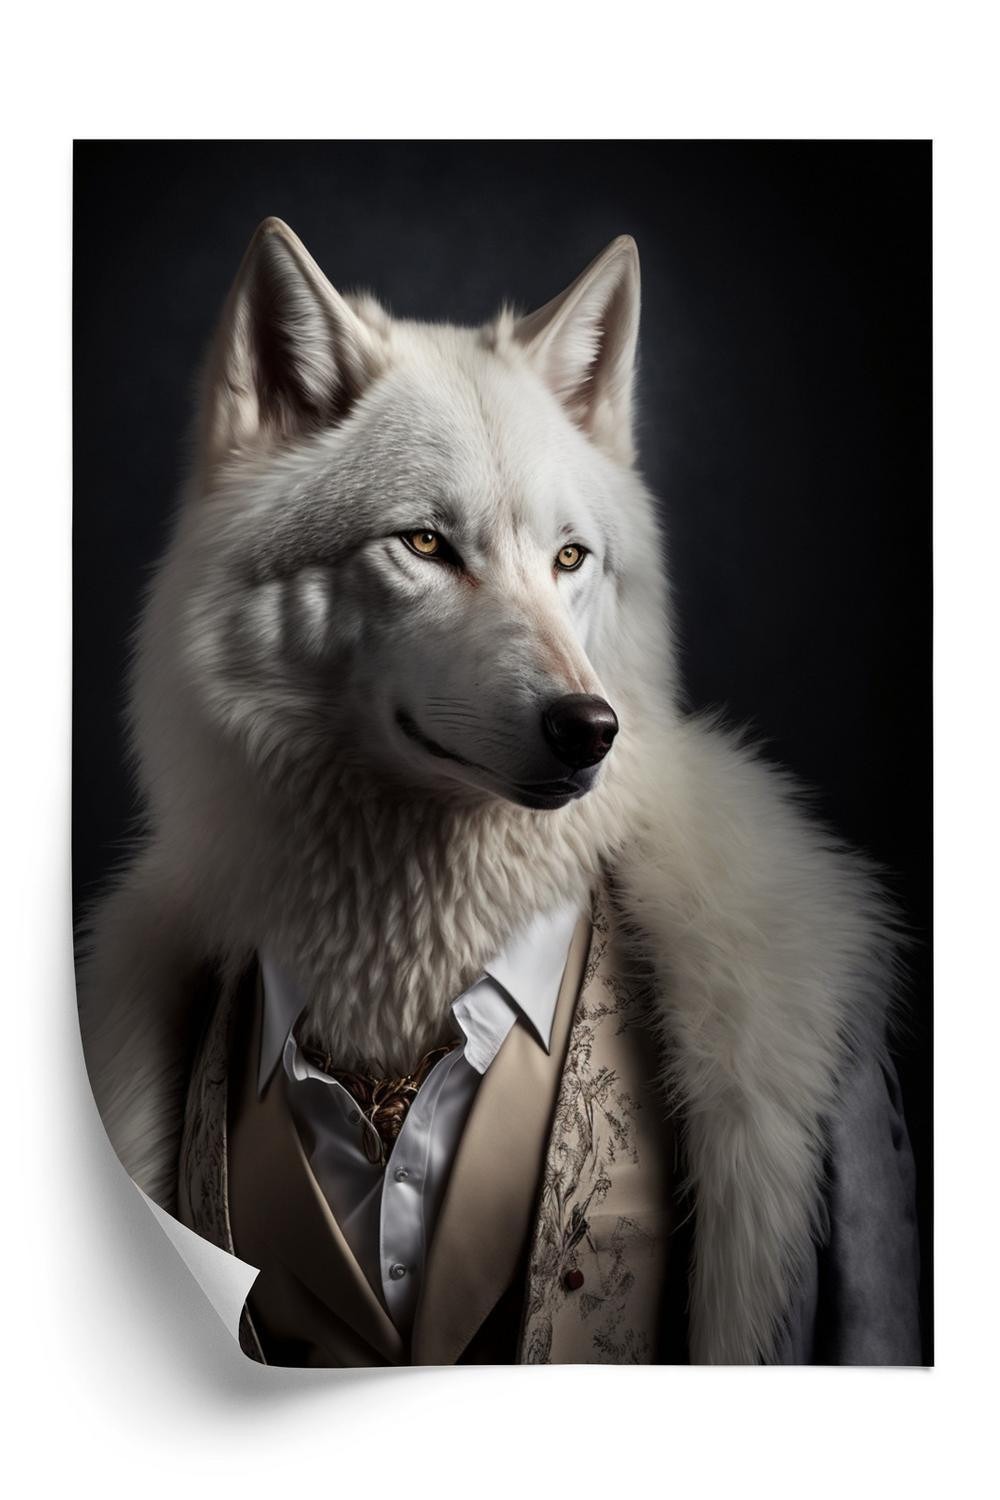 Plakat - Hvid ulv i vintertøj